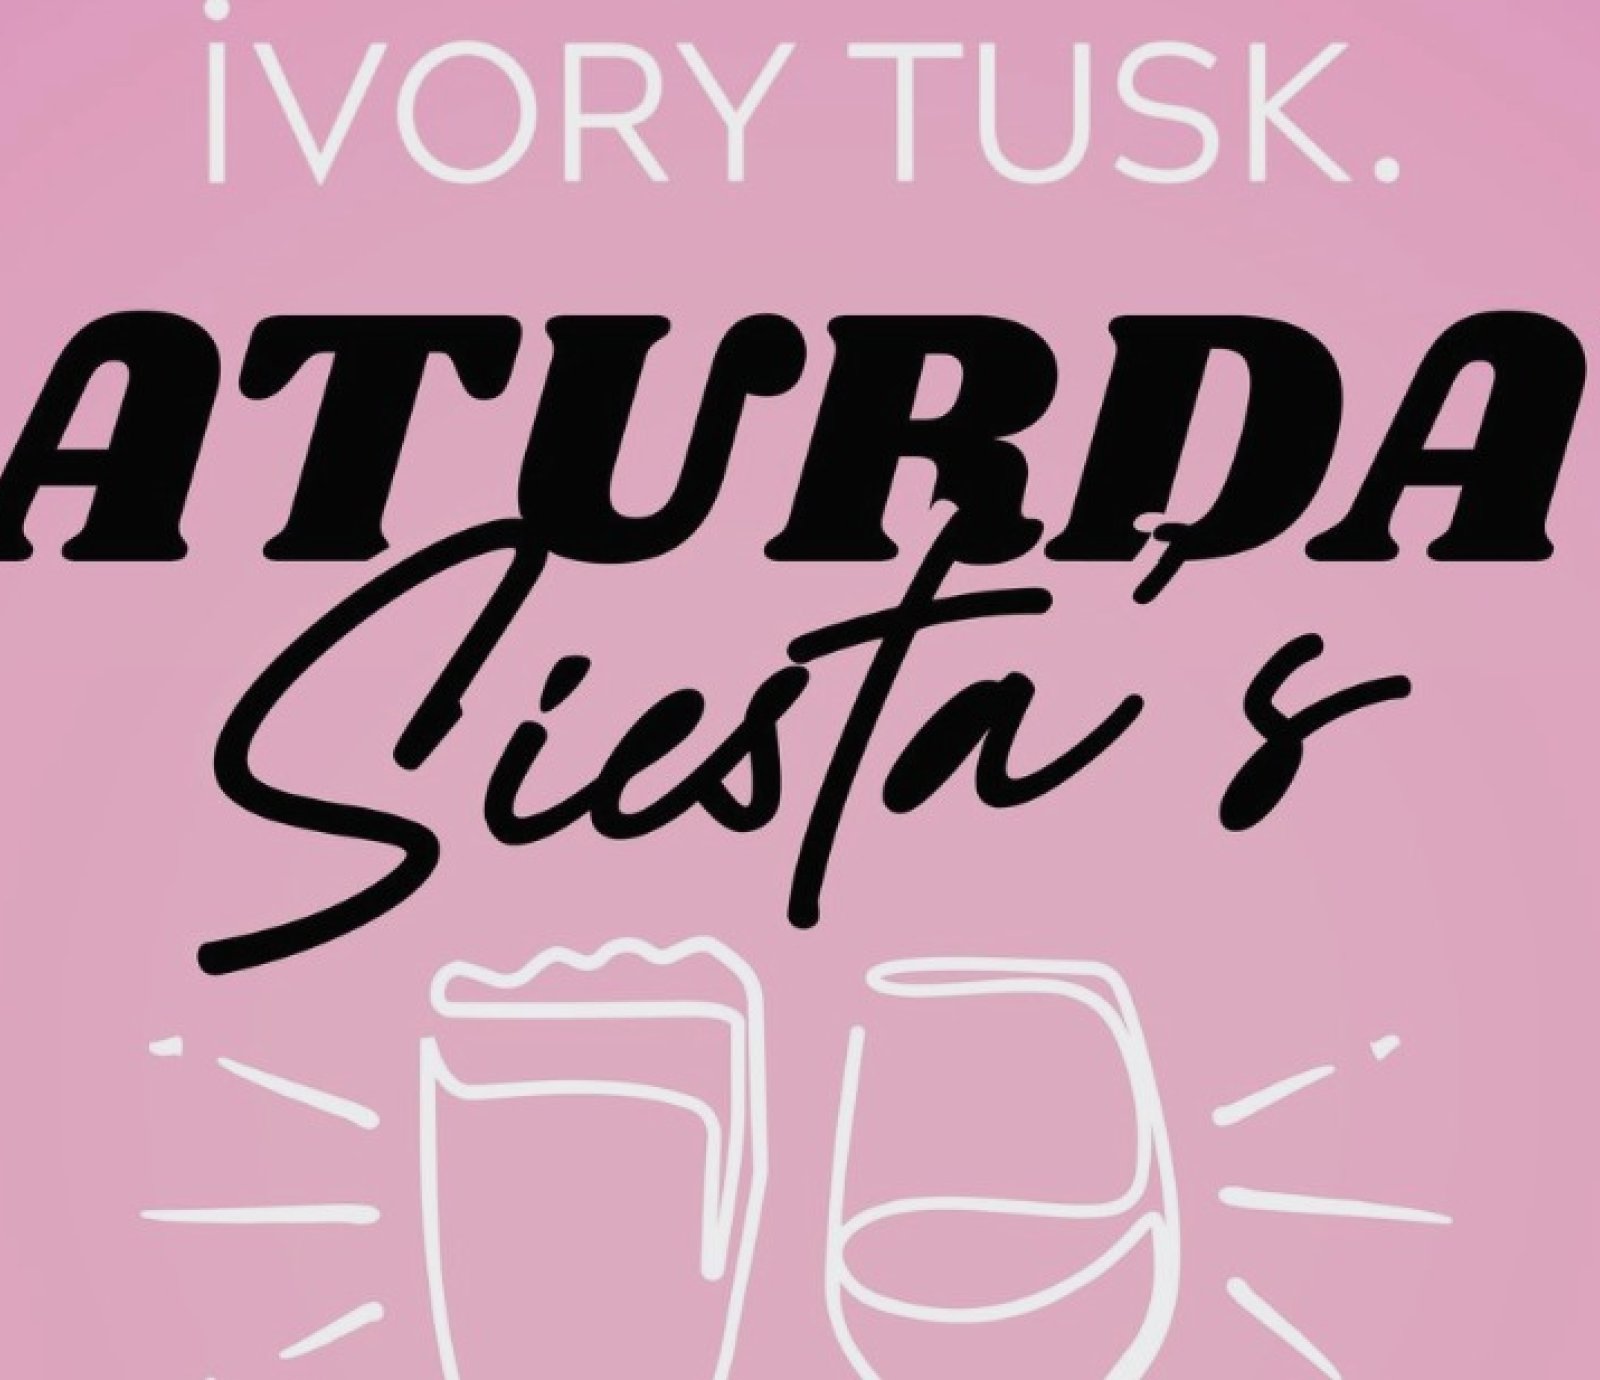 Saturday Siesta's at Ivory Tusk